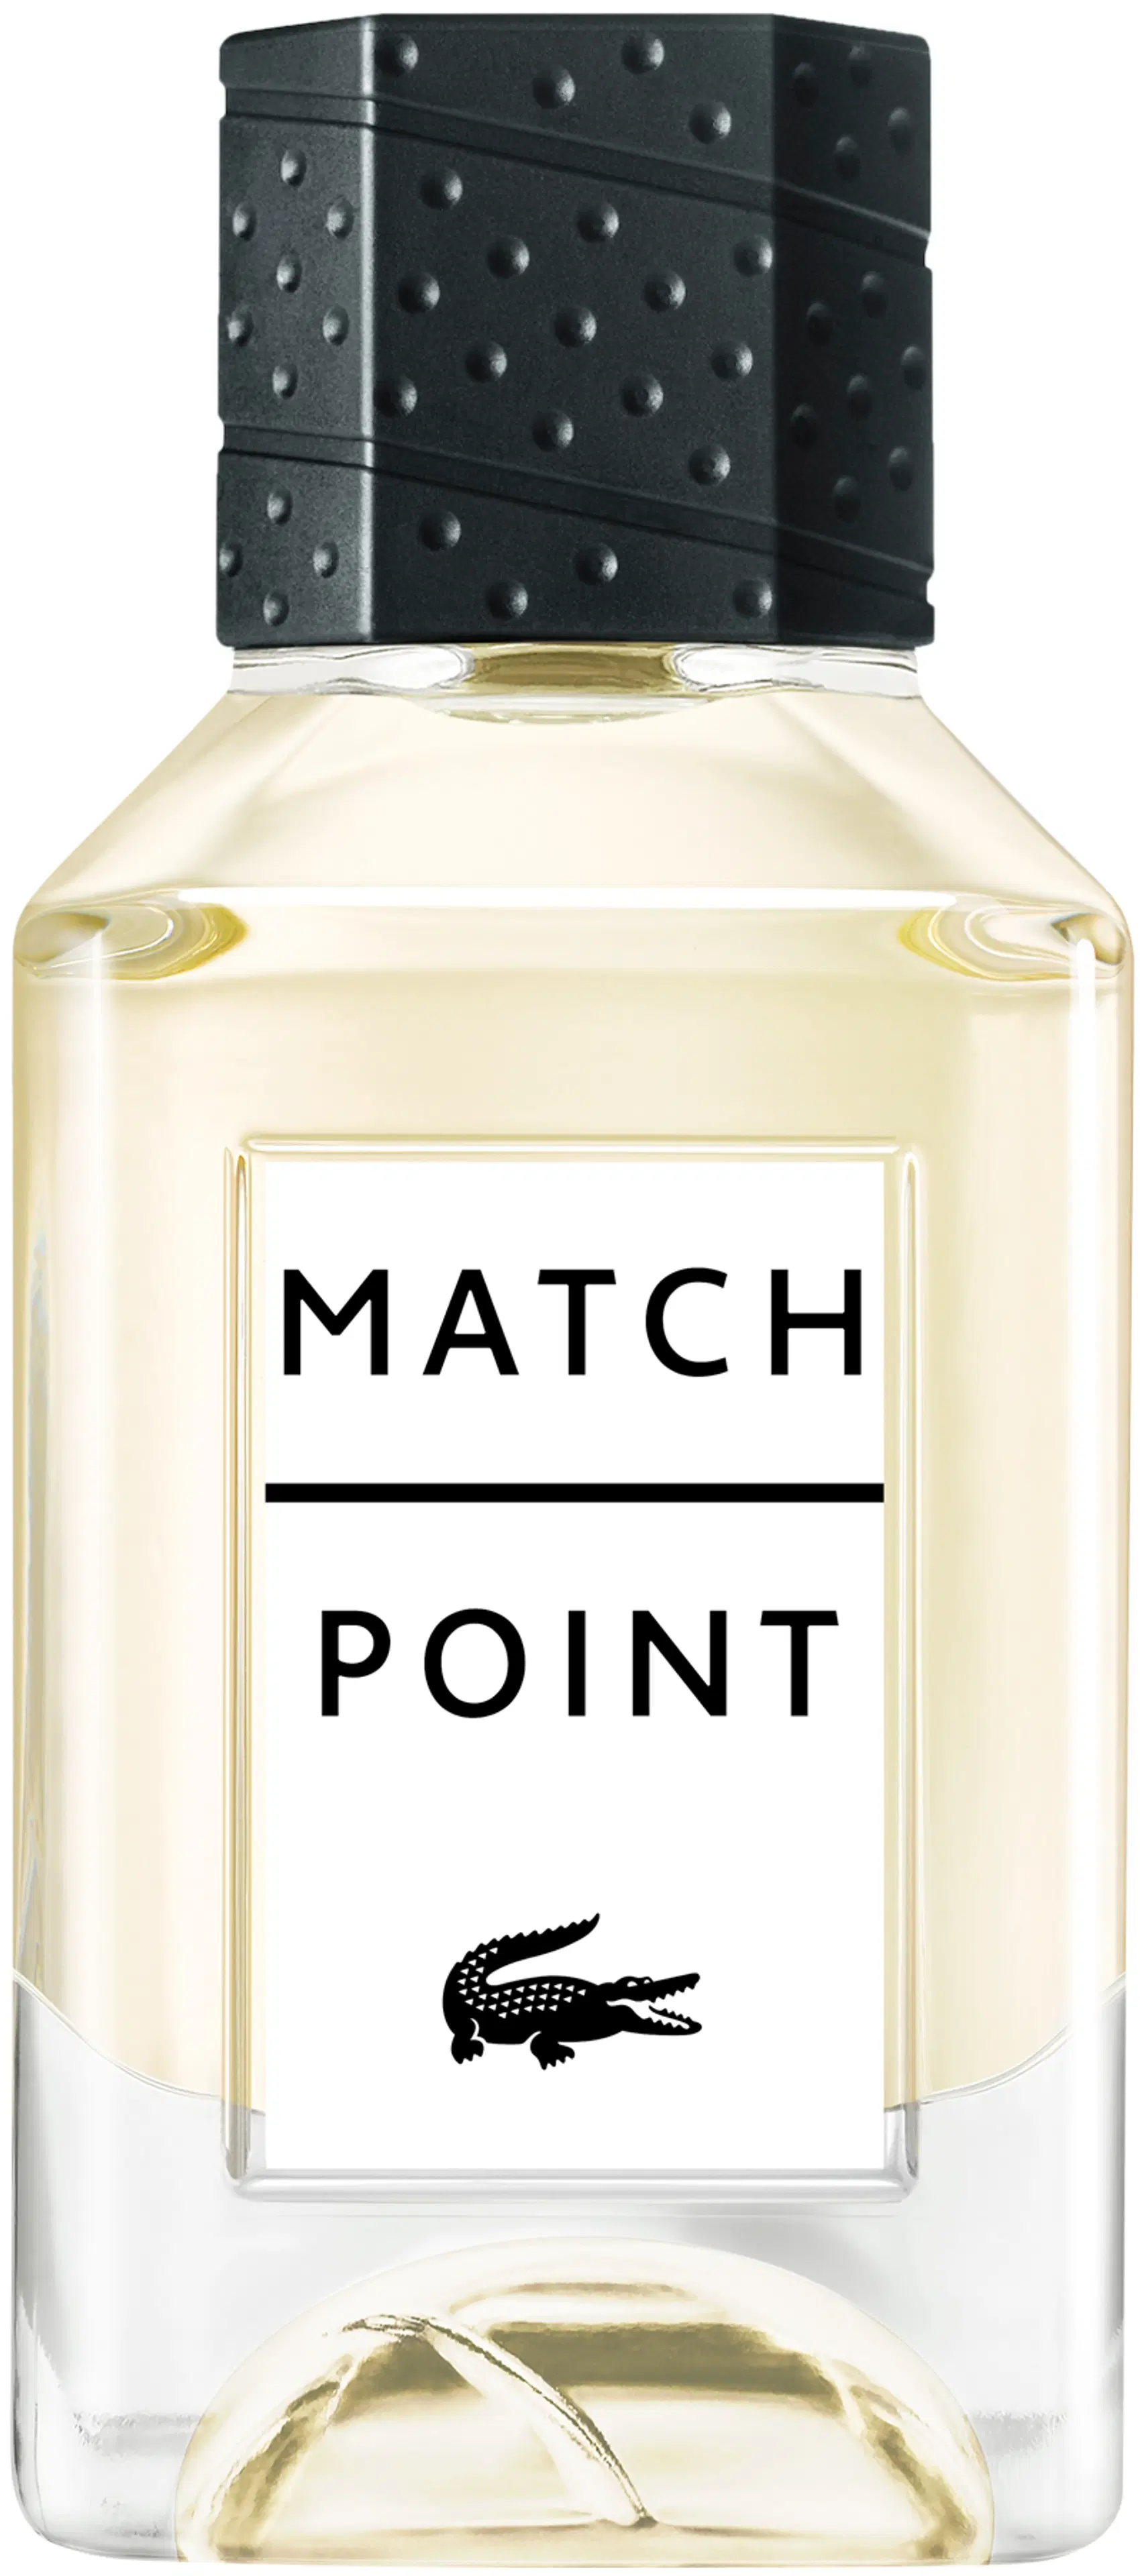 Lacoste Match Point Cologne EdT tuoksu 50 ml